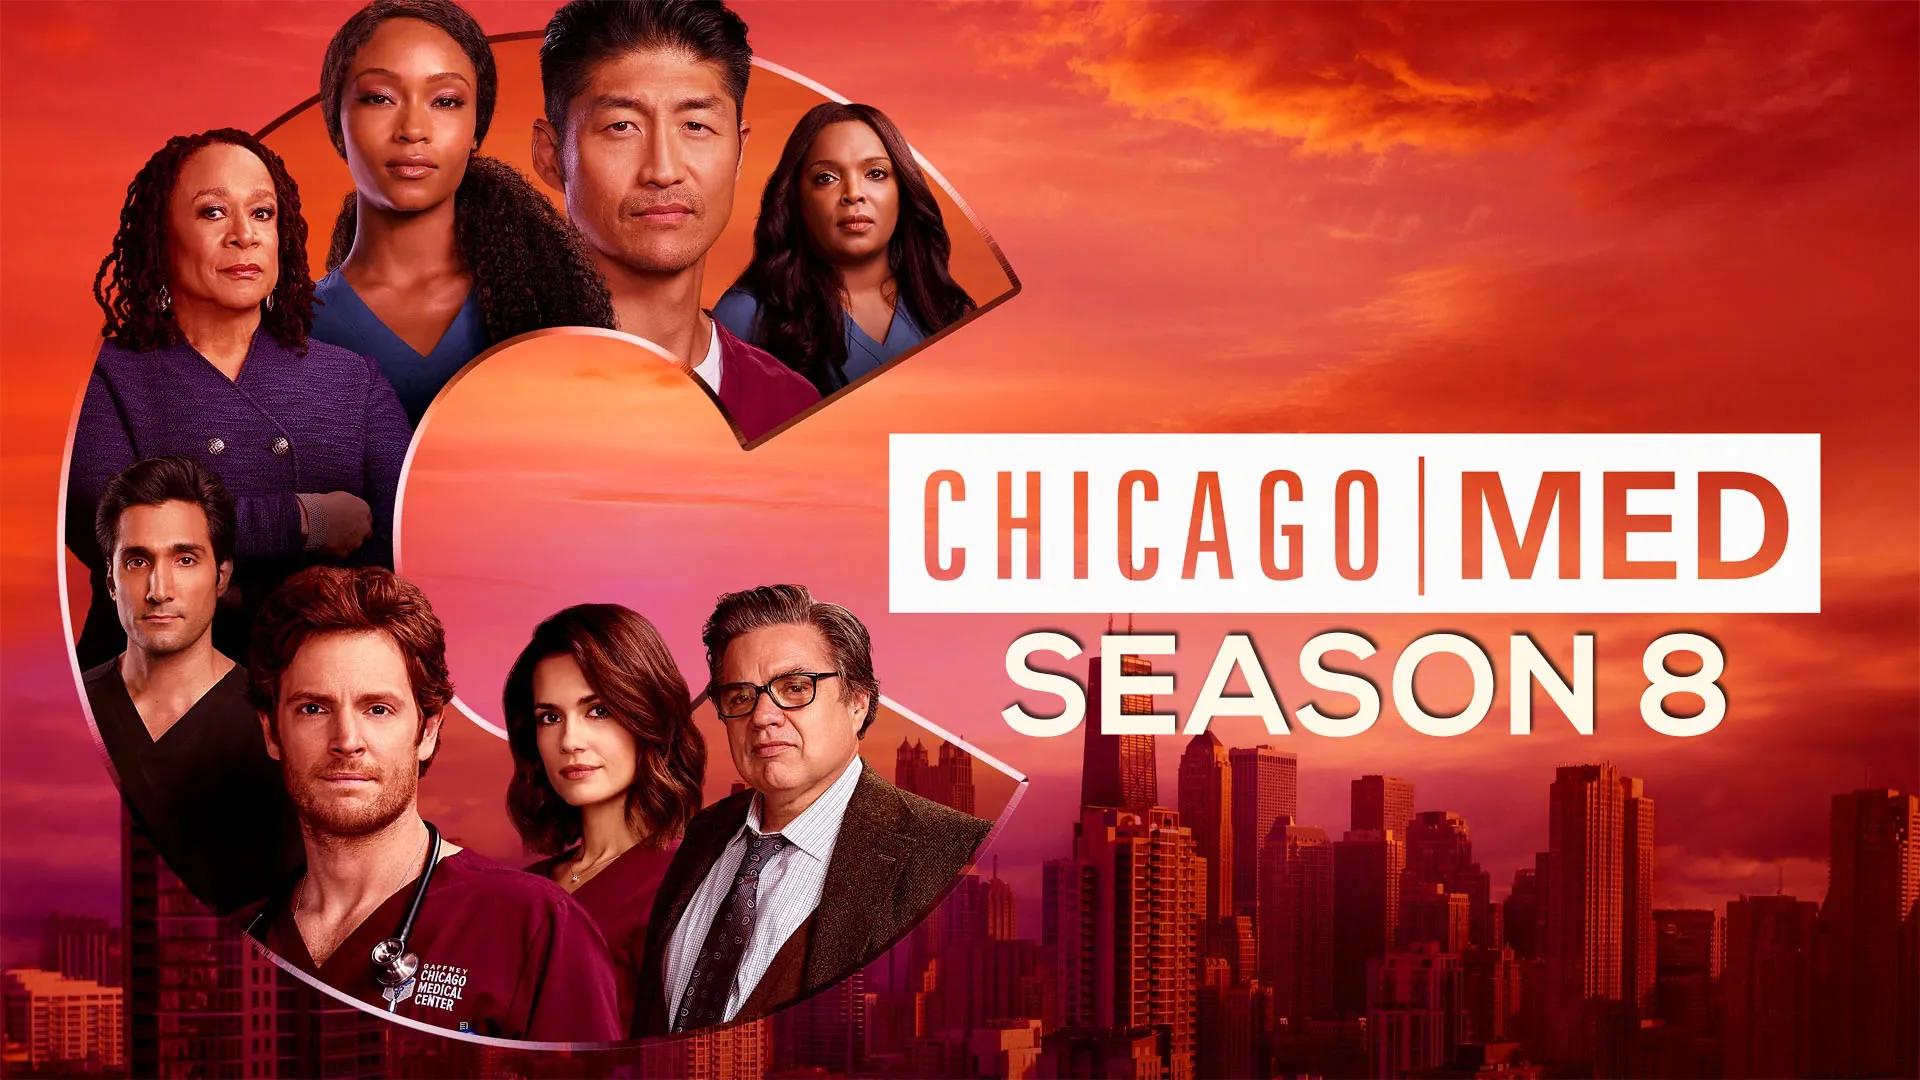 Chicago Med Season 8